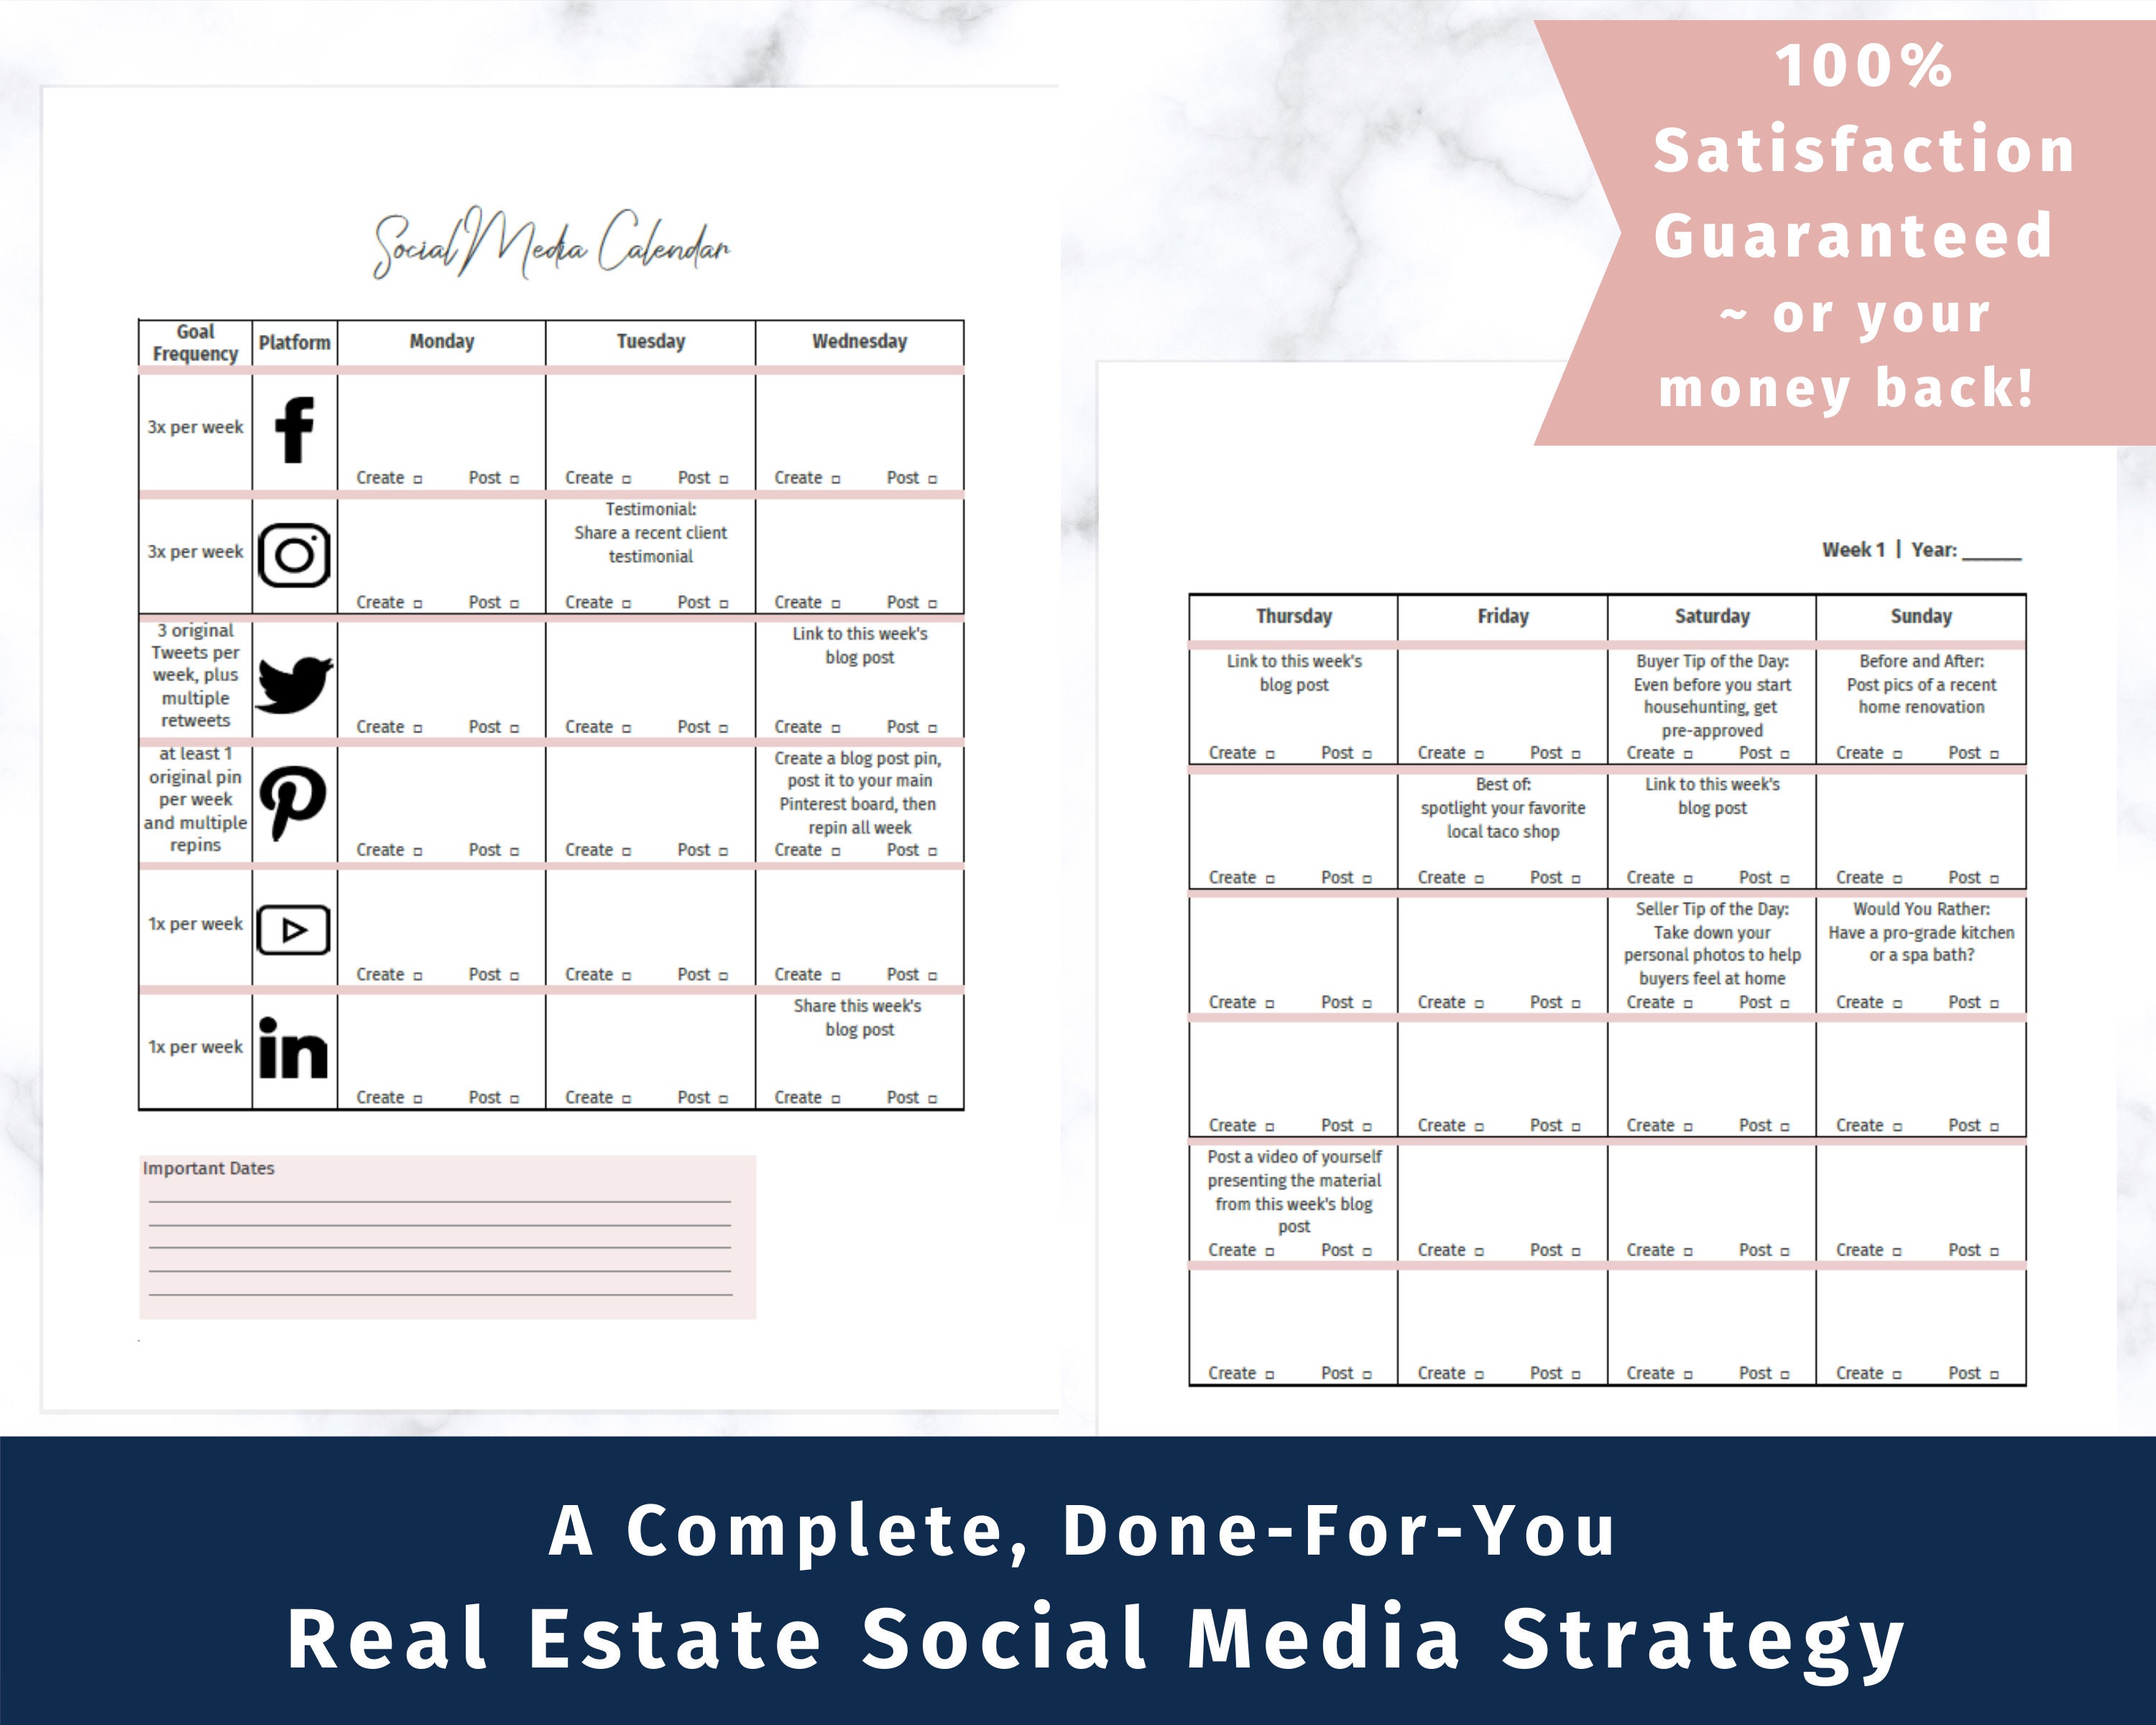 11 Incredible Real Estate Social Media Marketing Statistics -  BrandonGaille.com